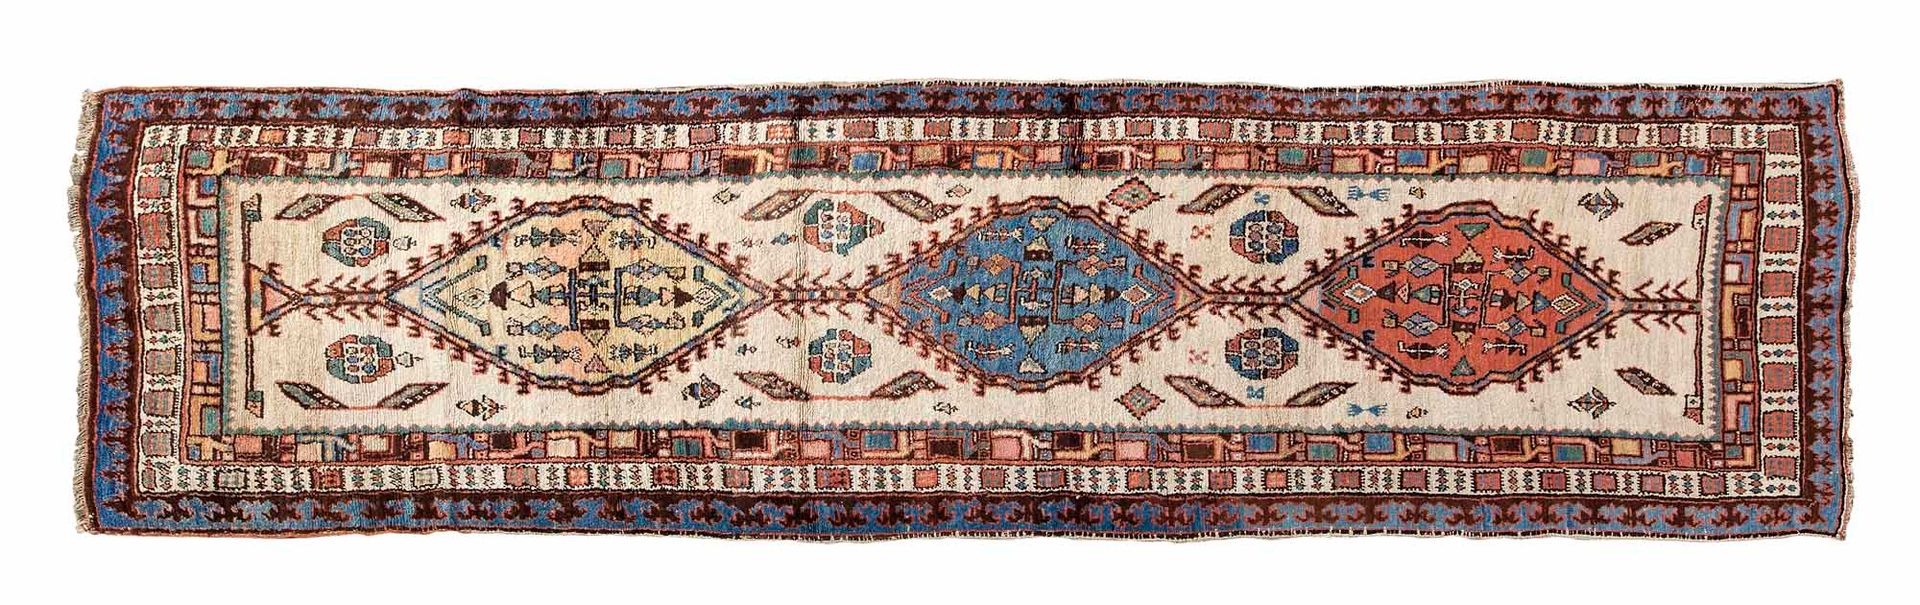 Null SARAB gallery carpet (Iran), mid 20th century

Dimensions : 343 x 116cm.

T&hellip;